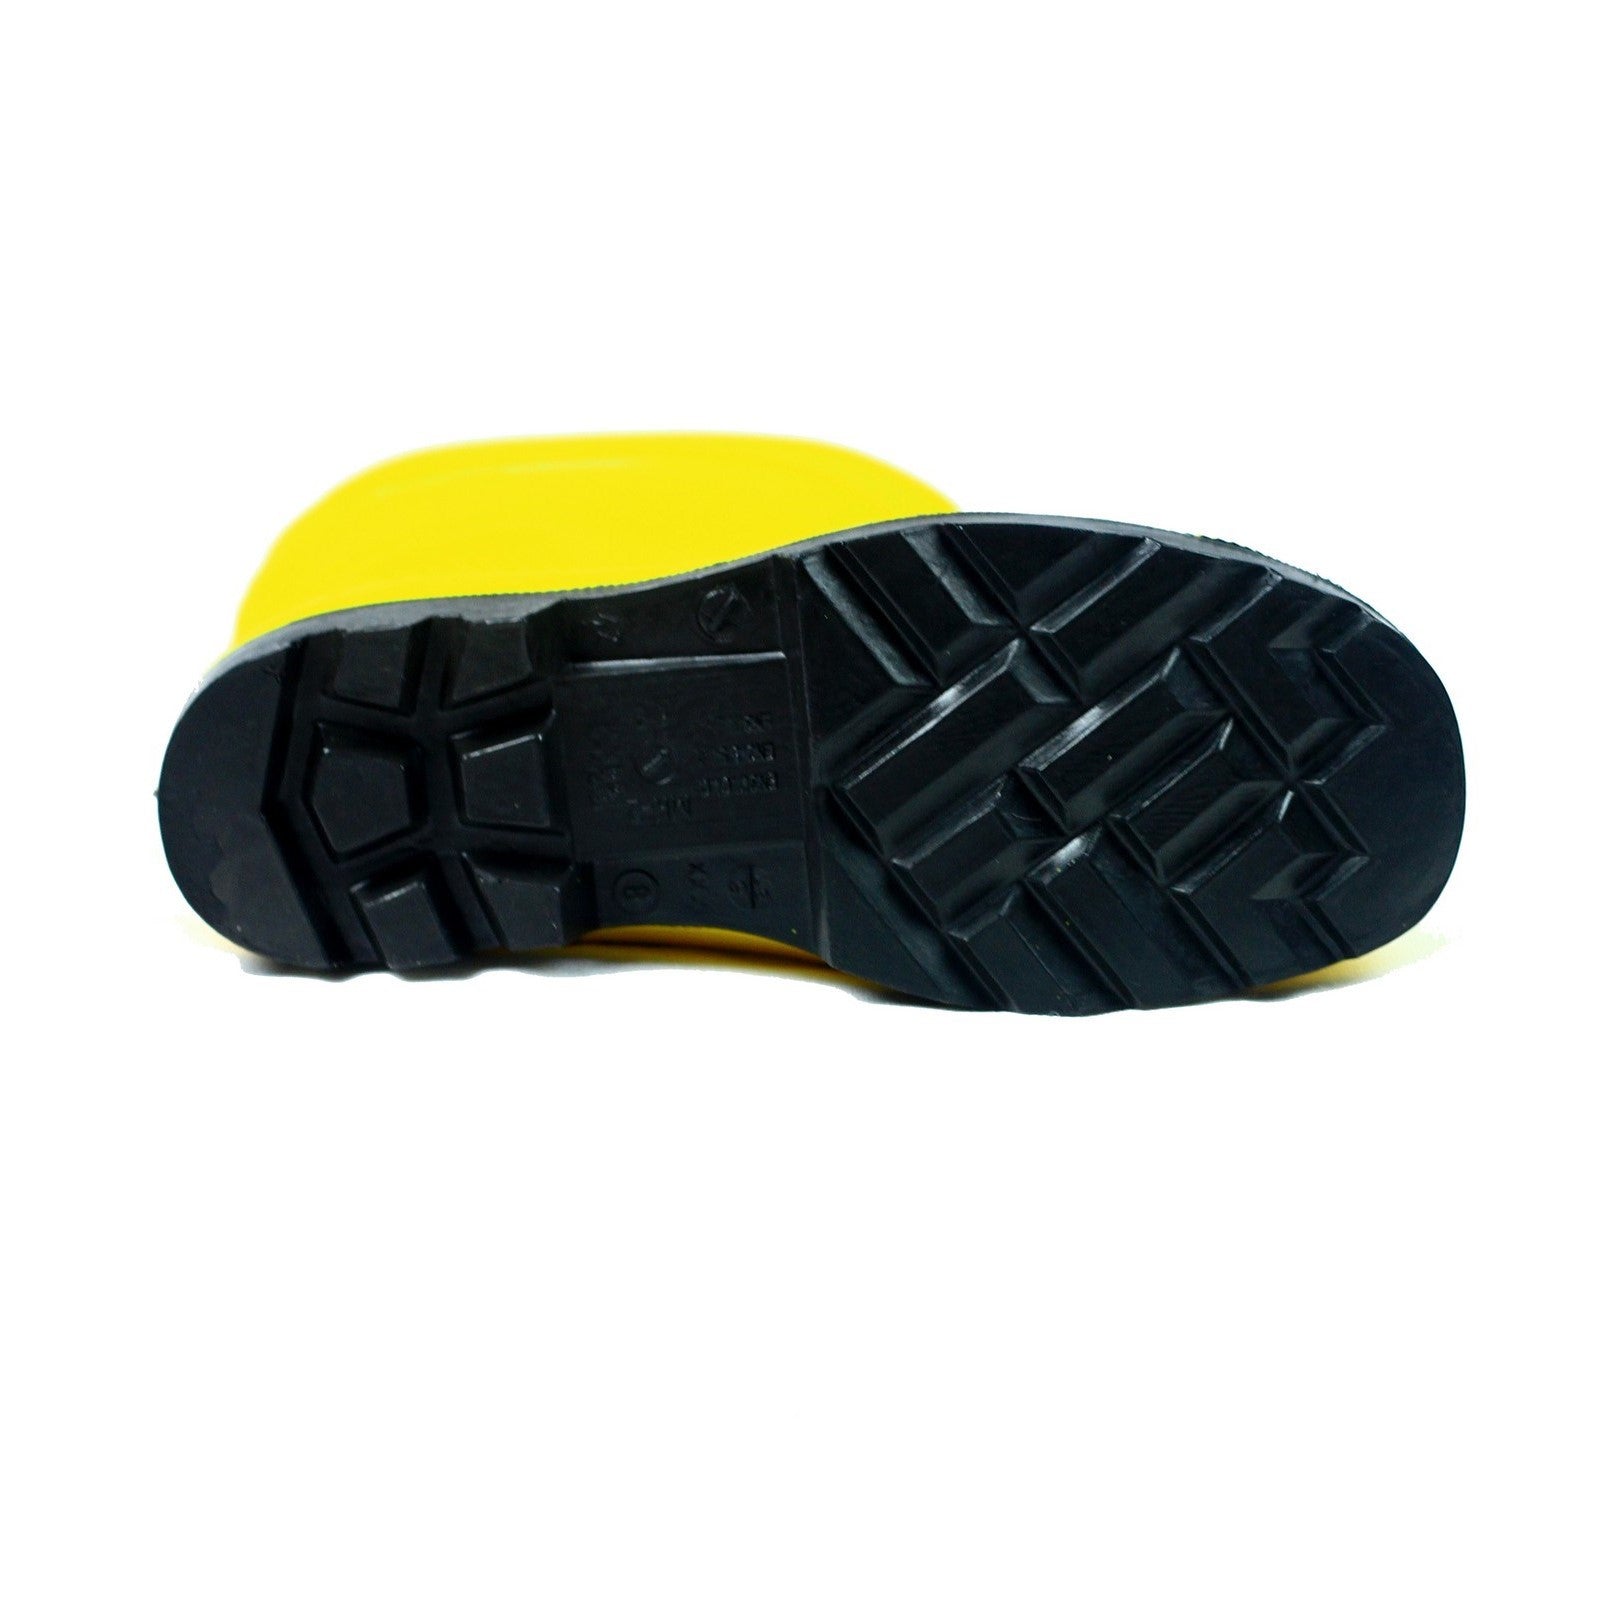 Dunlop Purofort Professional Safety Toe Purofort Wellington Boot  in Yellow